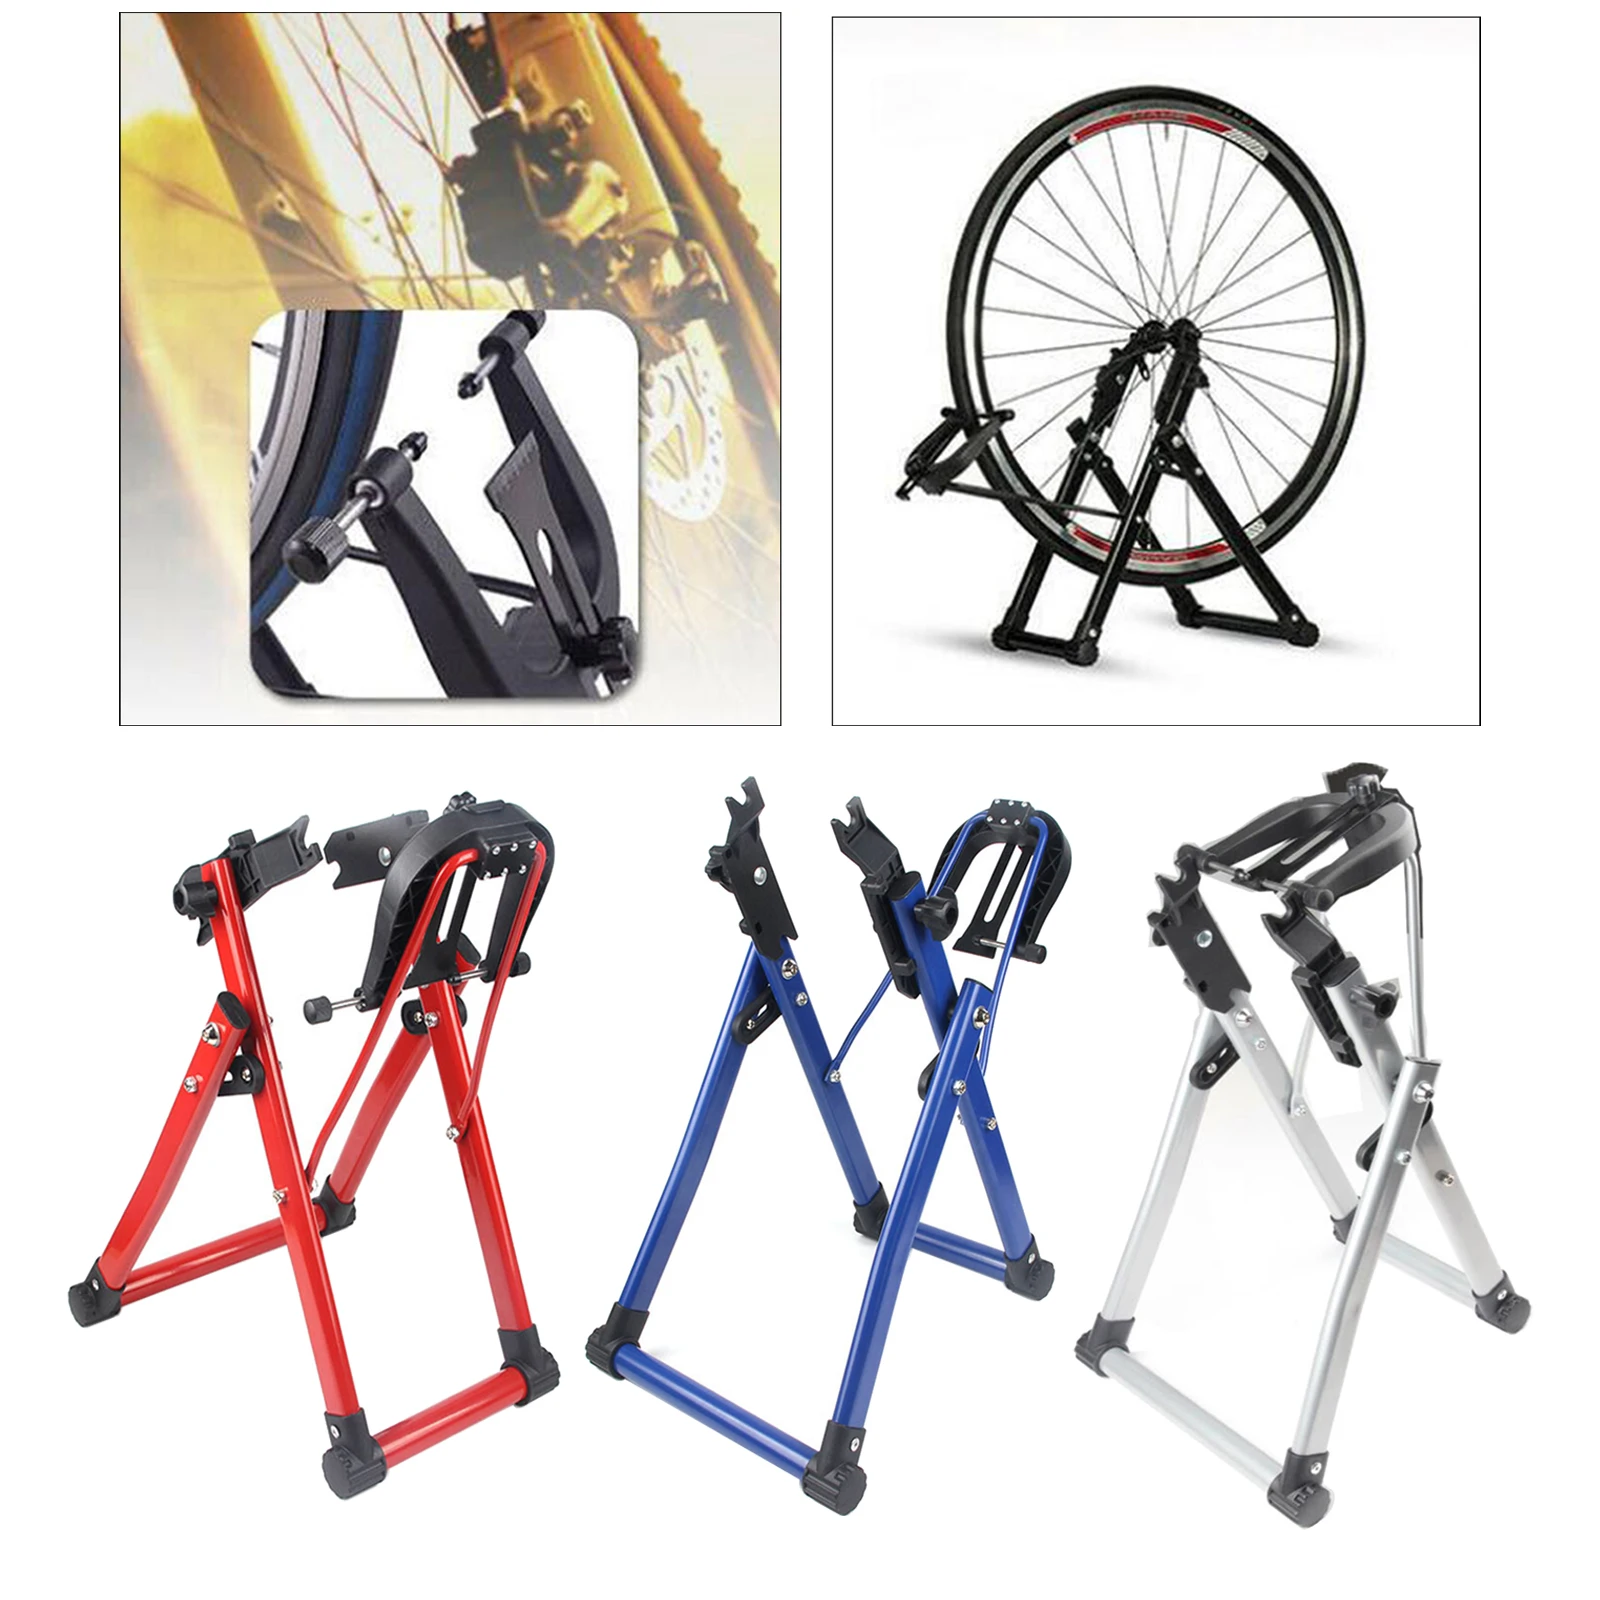 29"  Wheels Bike Wheel Truing Stand Bicycle Wheel Maintenance Fits 16" 